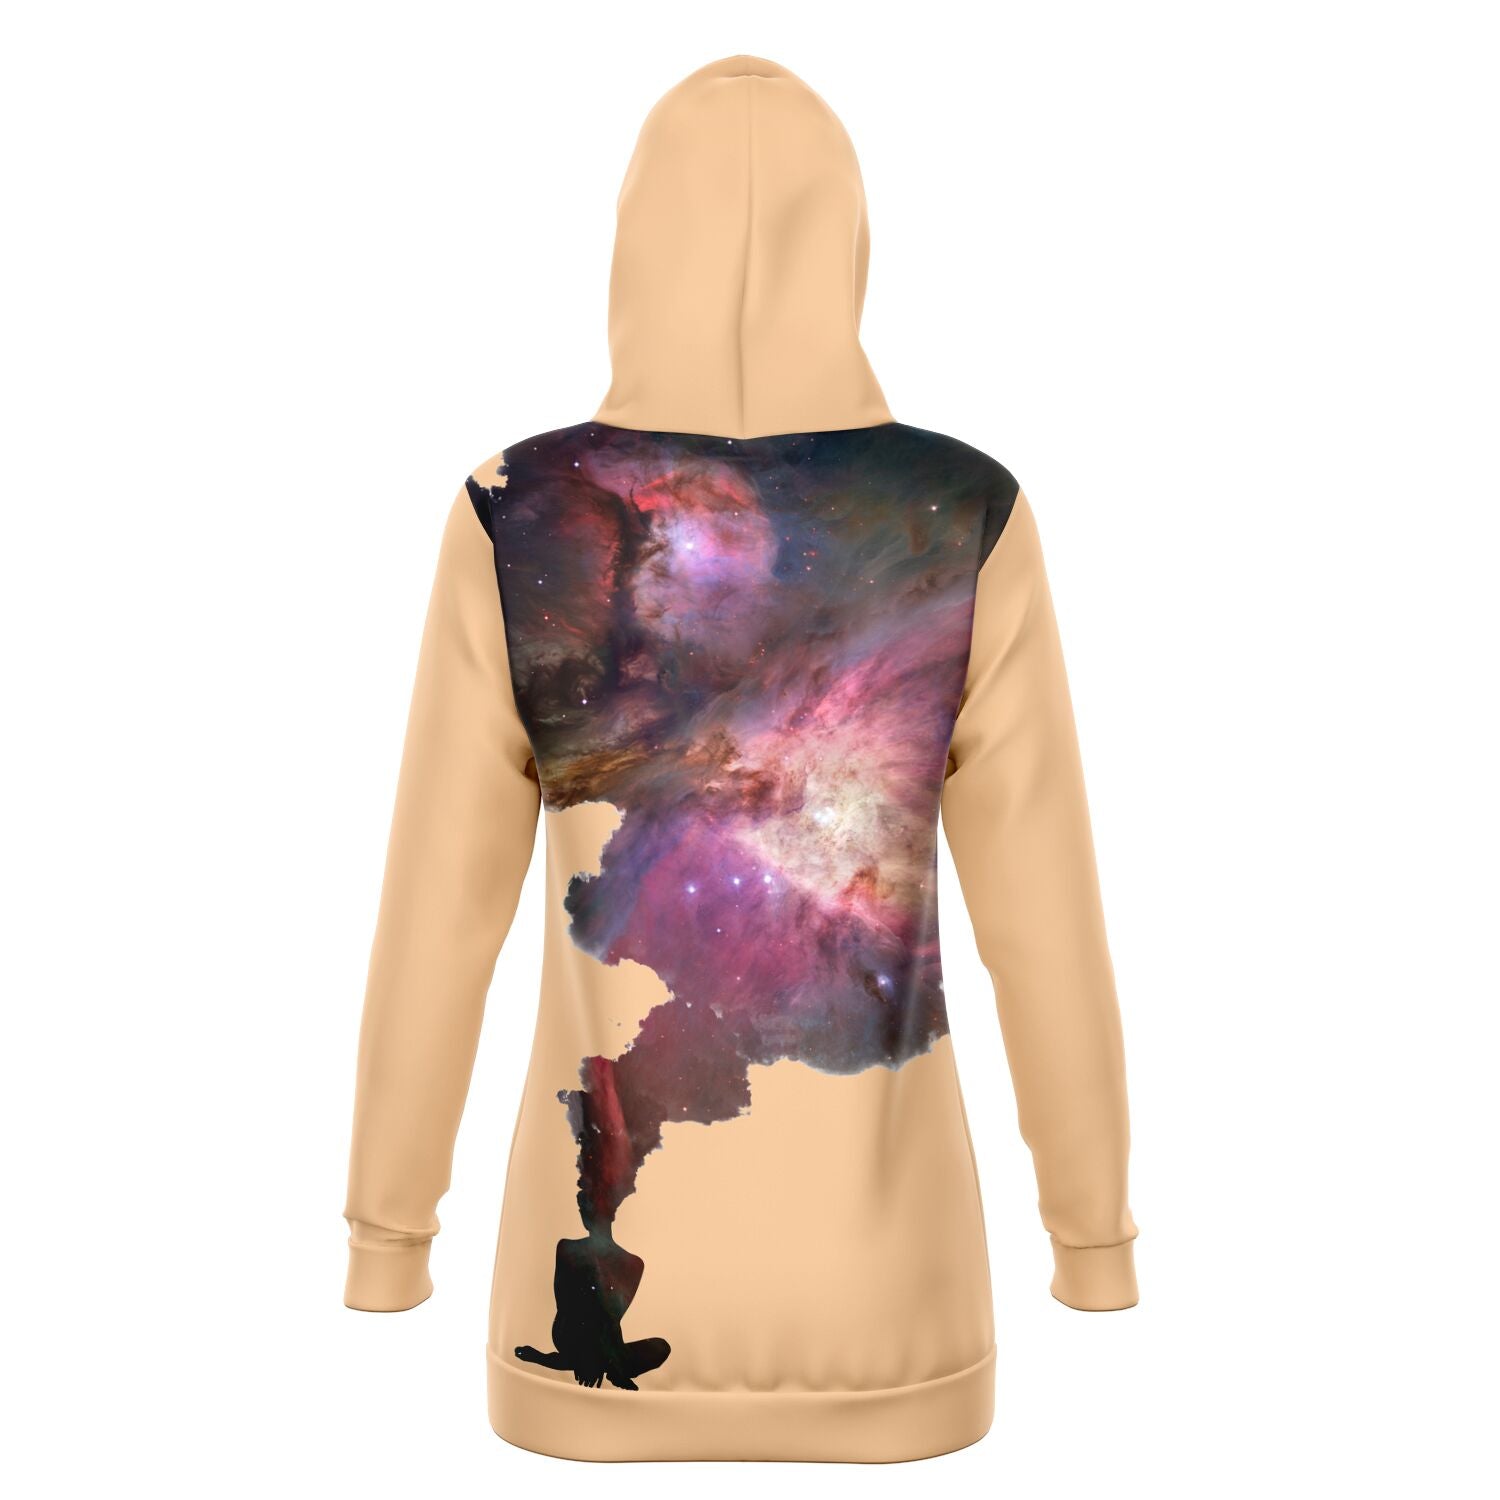 Space Nebula hoodie